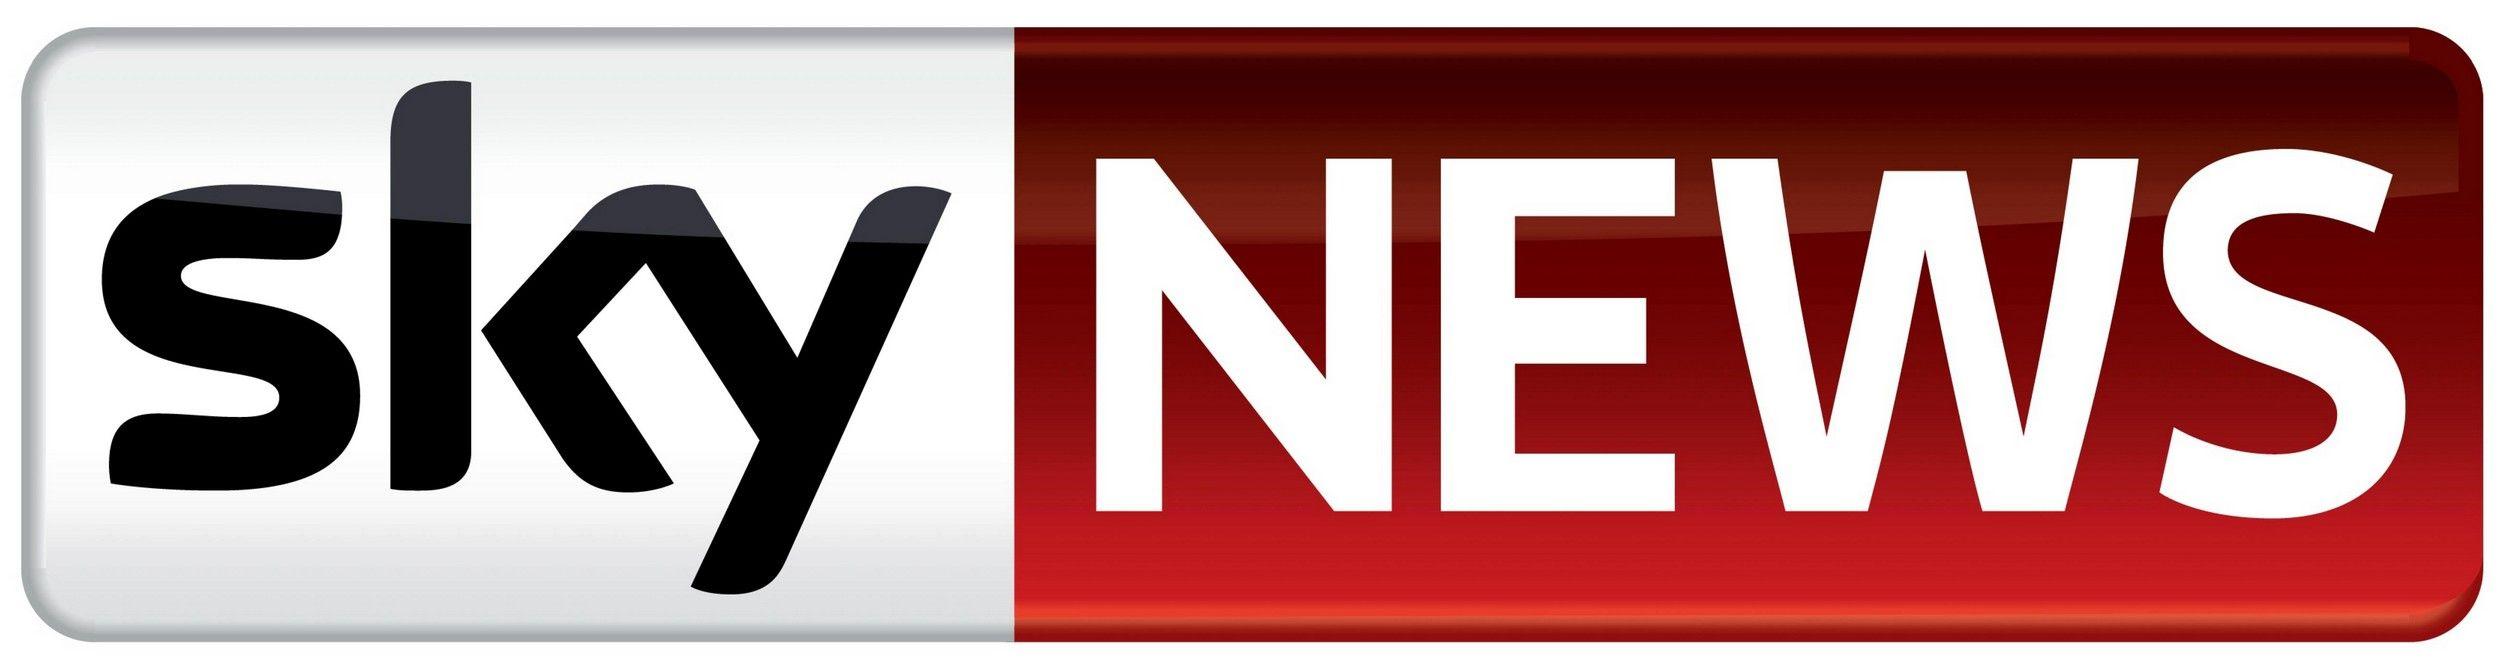 News Channel Logo - Image result for sky news logo | Haemophilia | Pinterest | Sky news ...